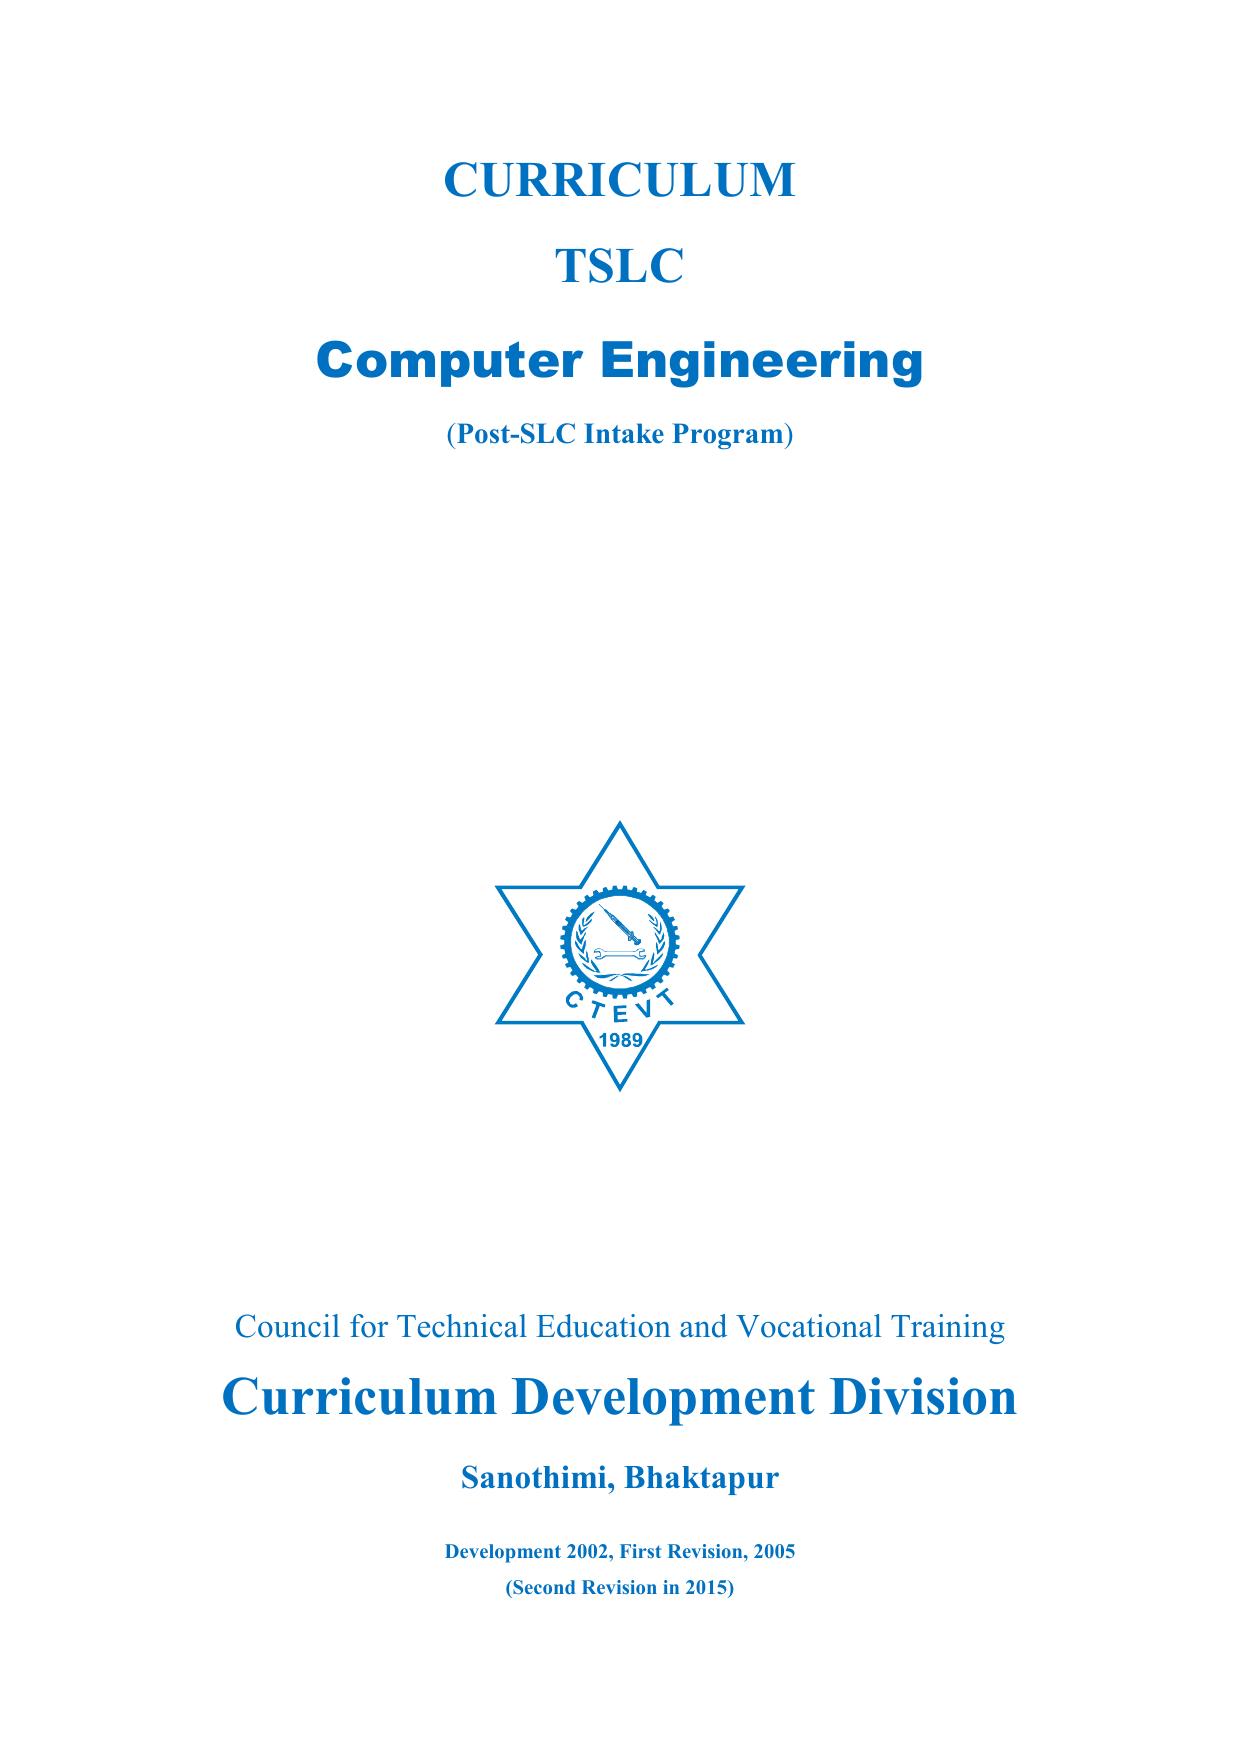 TSLC in Computer Engineering Post SLC, 2015